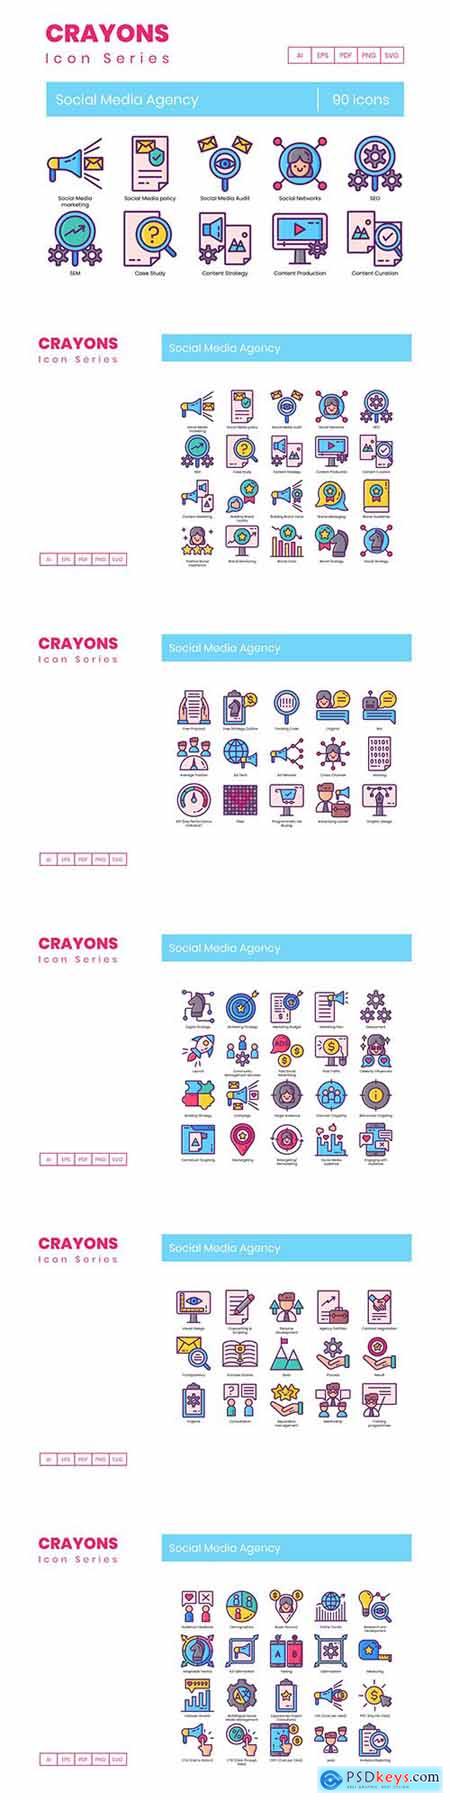 90 Social Media Agency Icons - Crayons Series